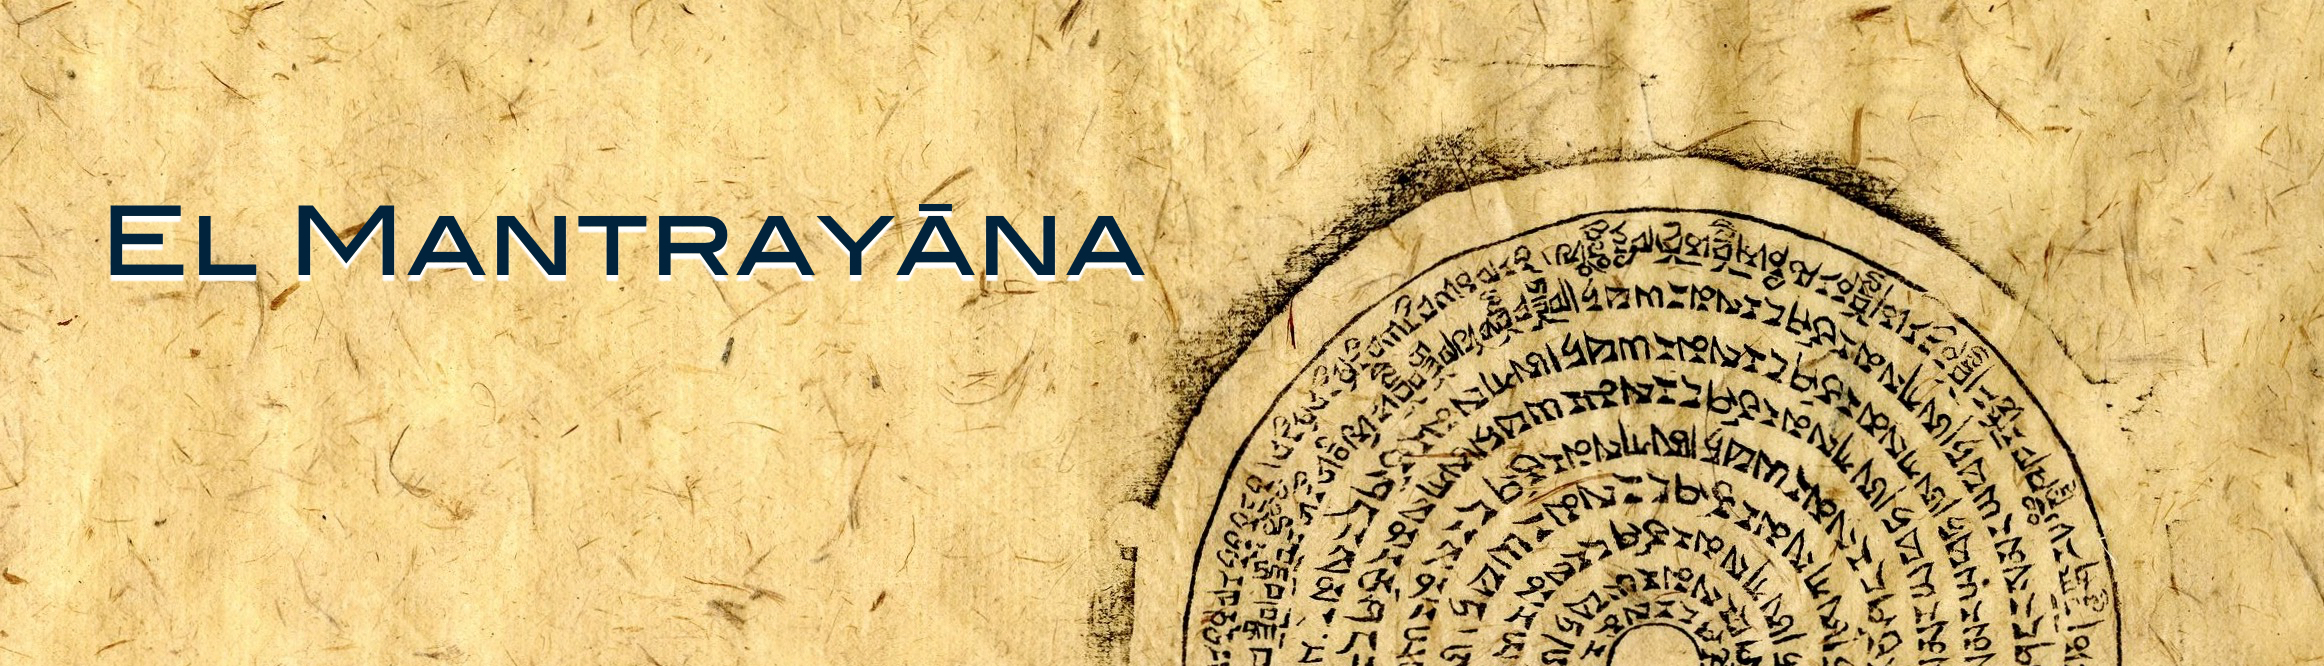 mantrayana